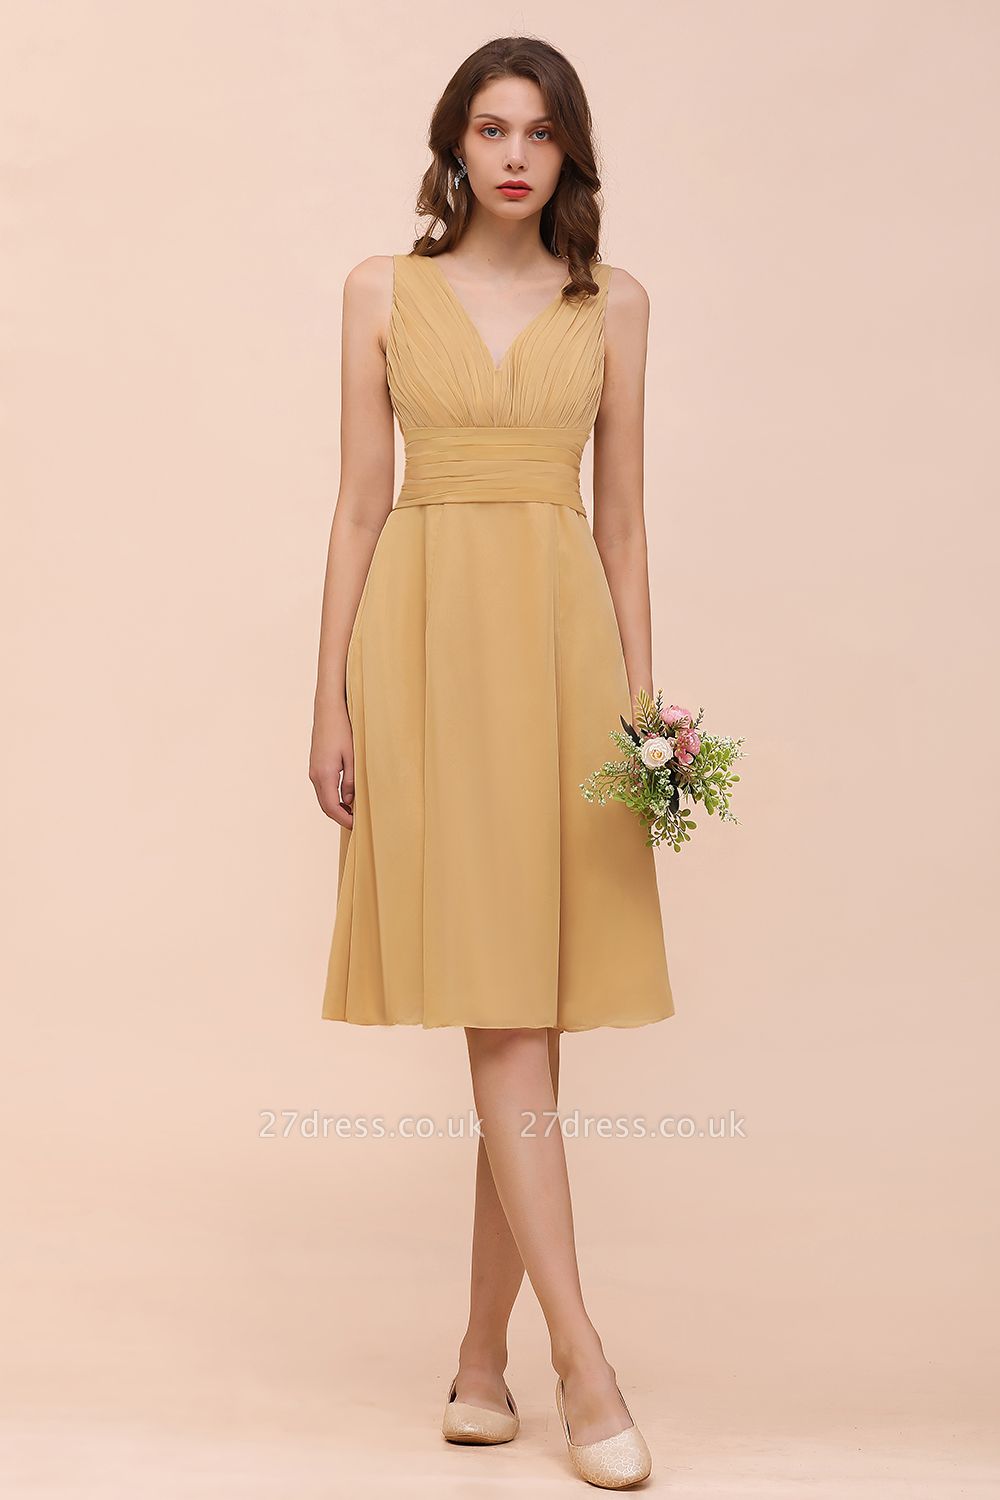 Short Gold Bridesmaid Dress V-neck Sleeveless Chiffon Knee Length Formal Dress